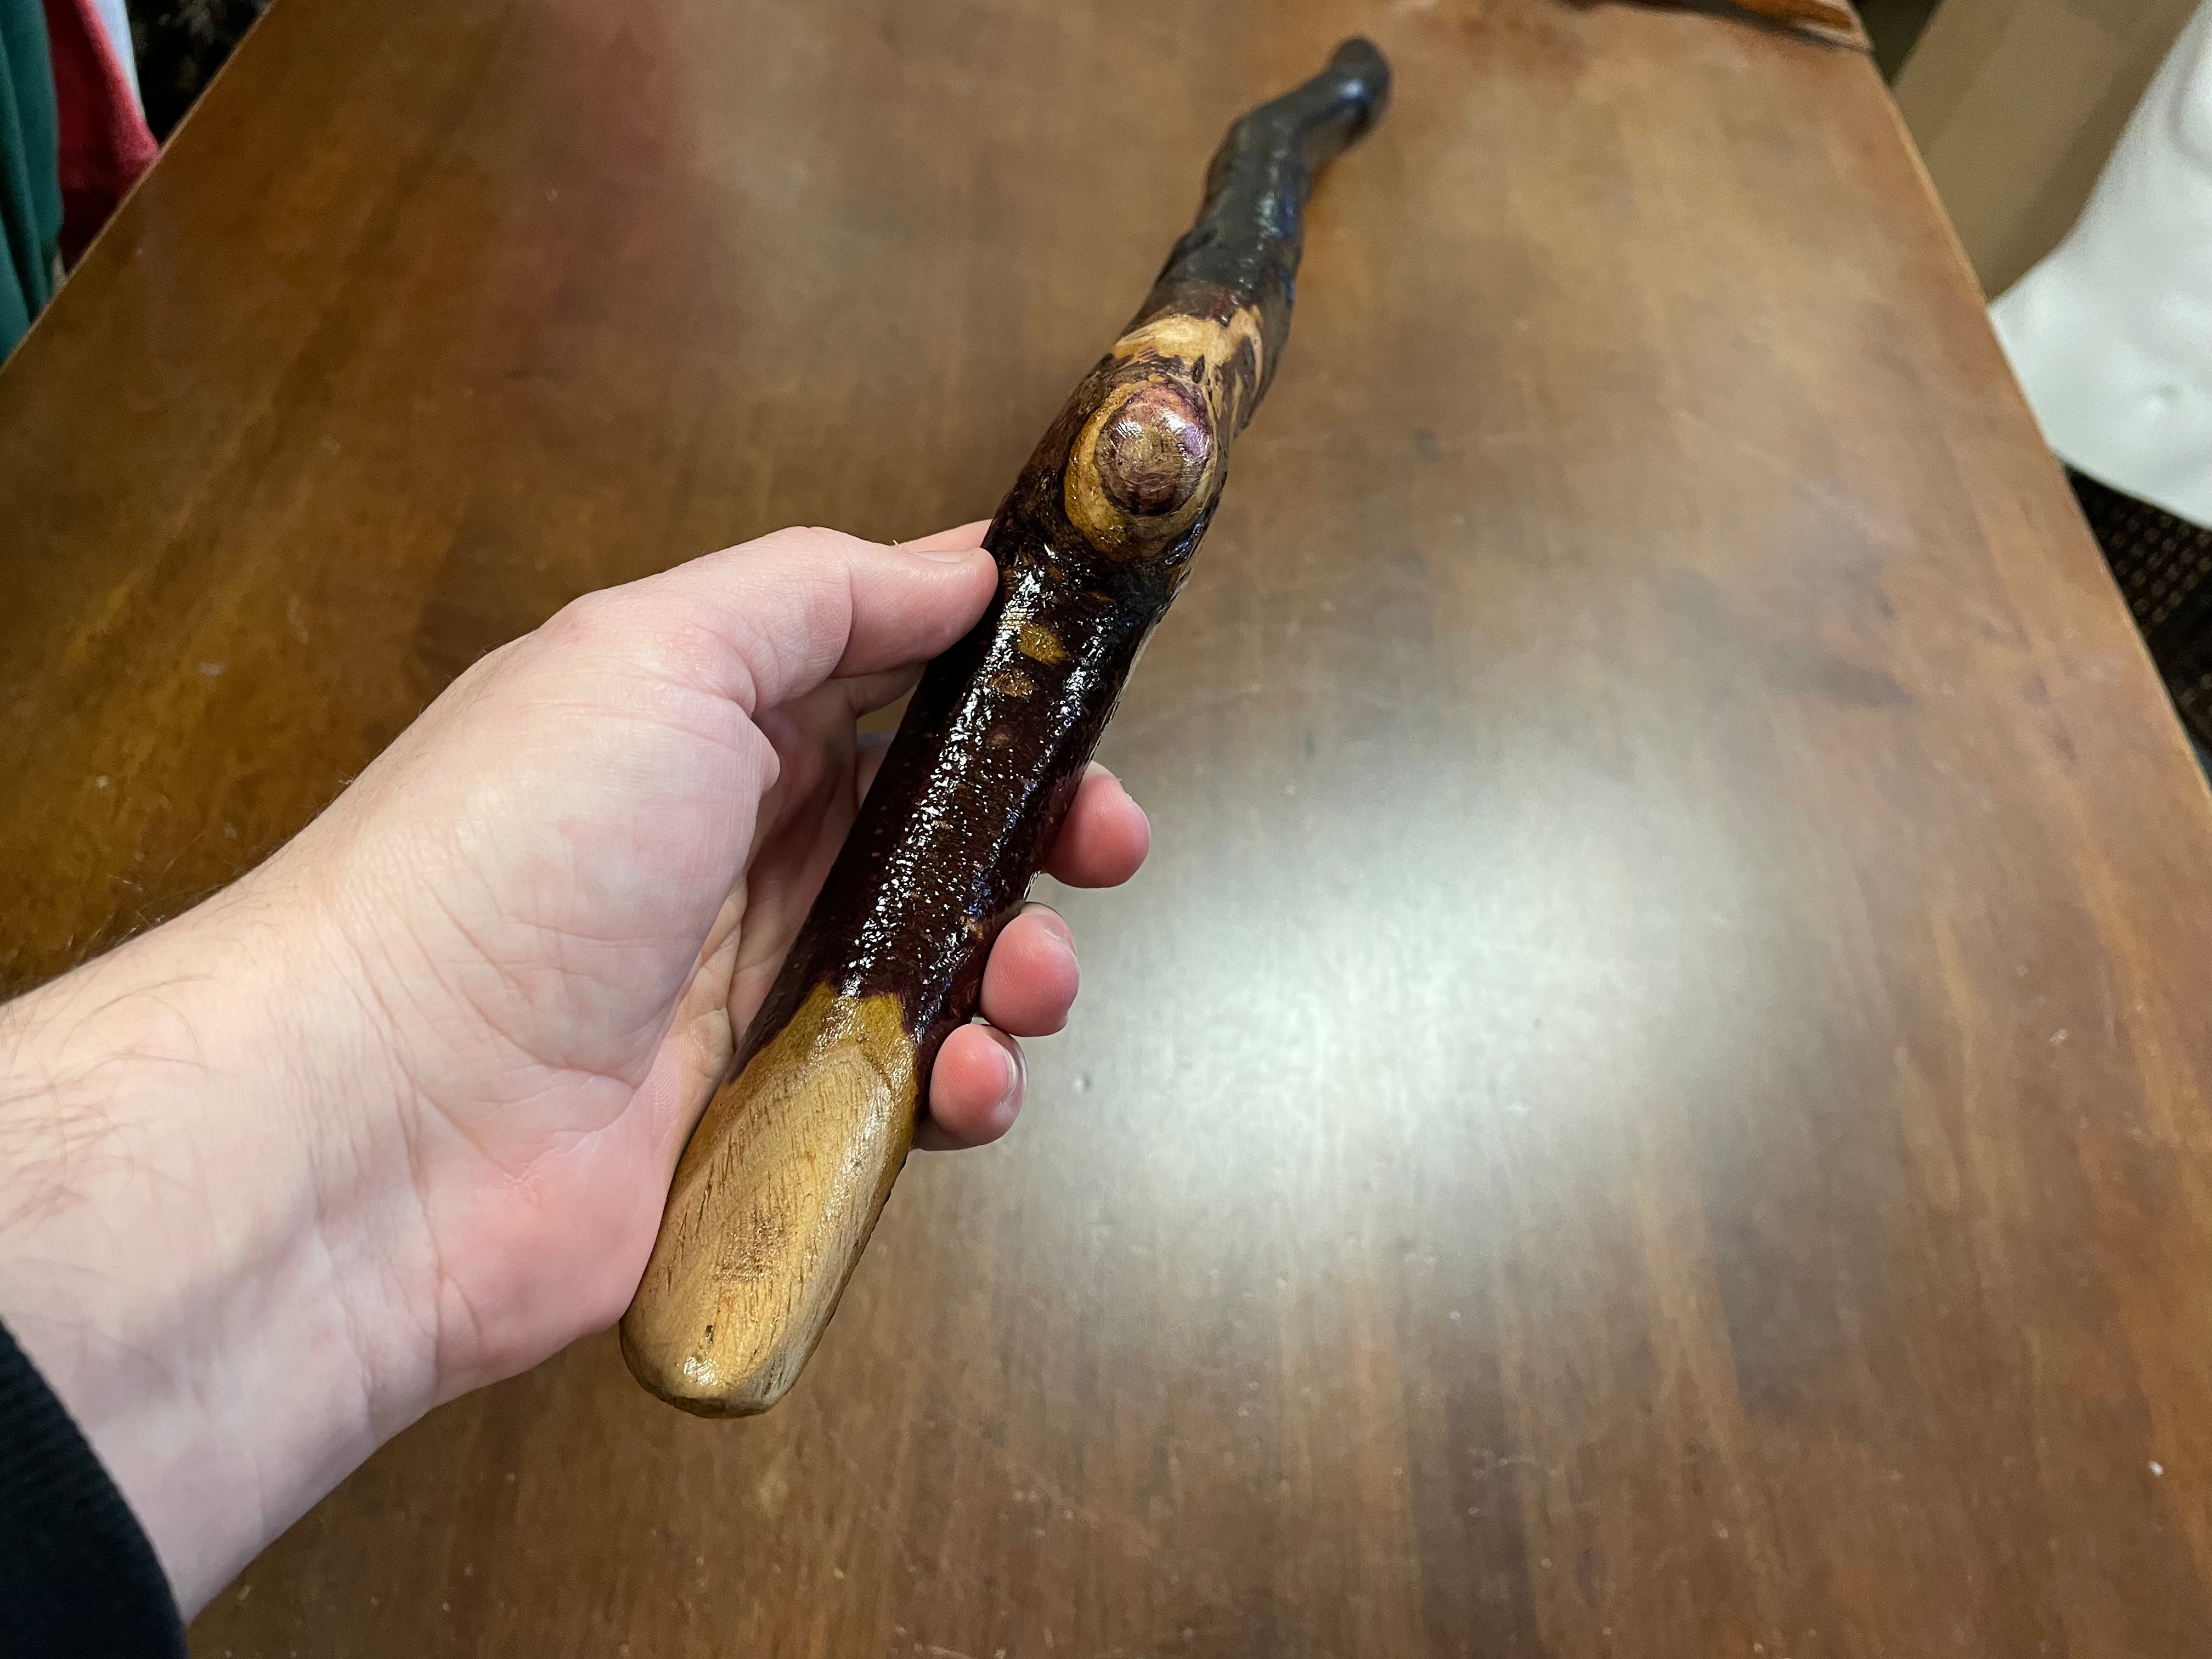 Blackthorn Walking Stick 34 inch - Handmade in Ireland